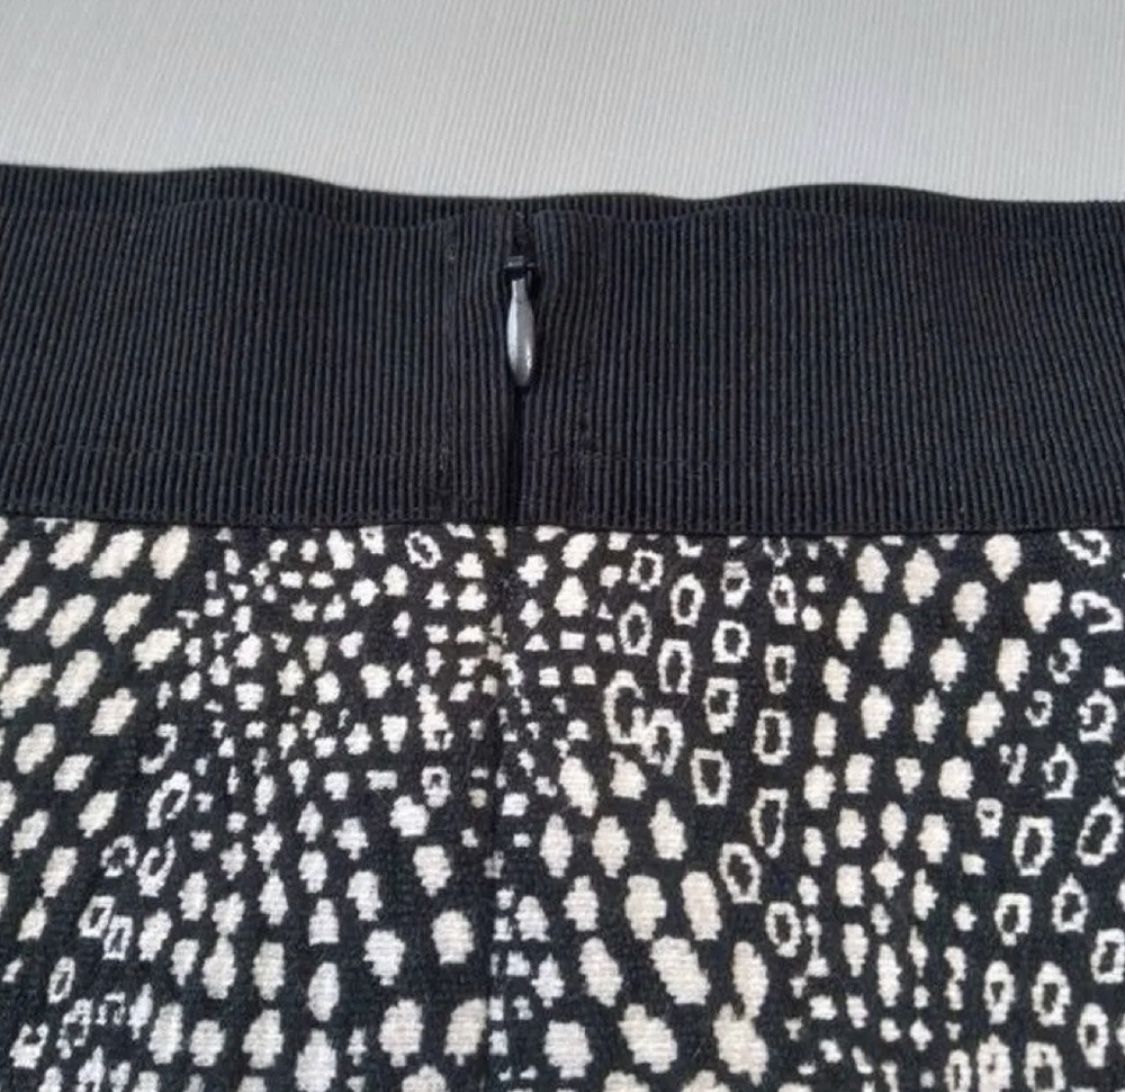 ANN TAYLOR Textured Knit High Waisted Pencil Skirt Mosaic Print Blck|Wht EUC (S)